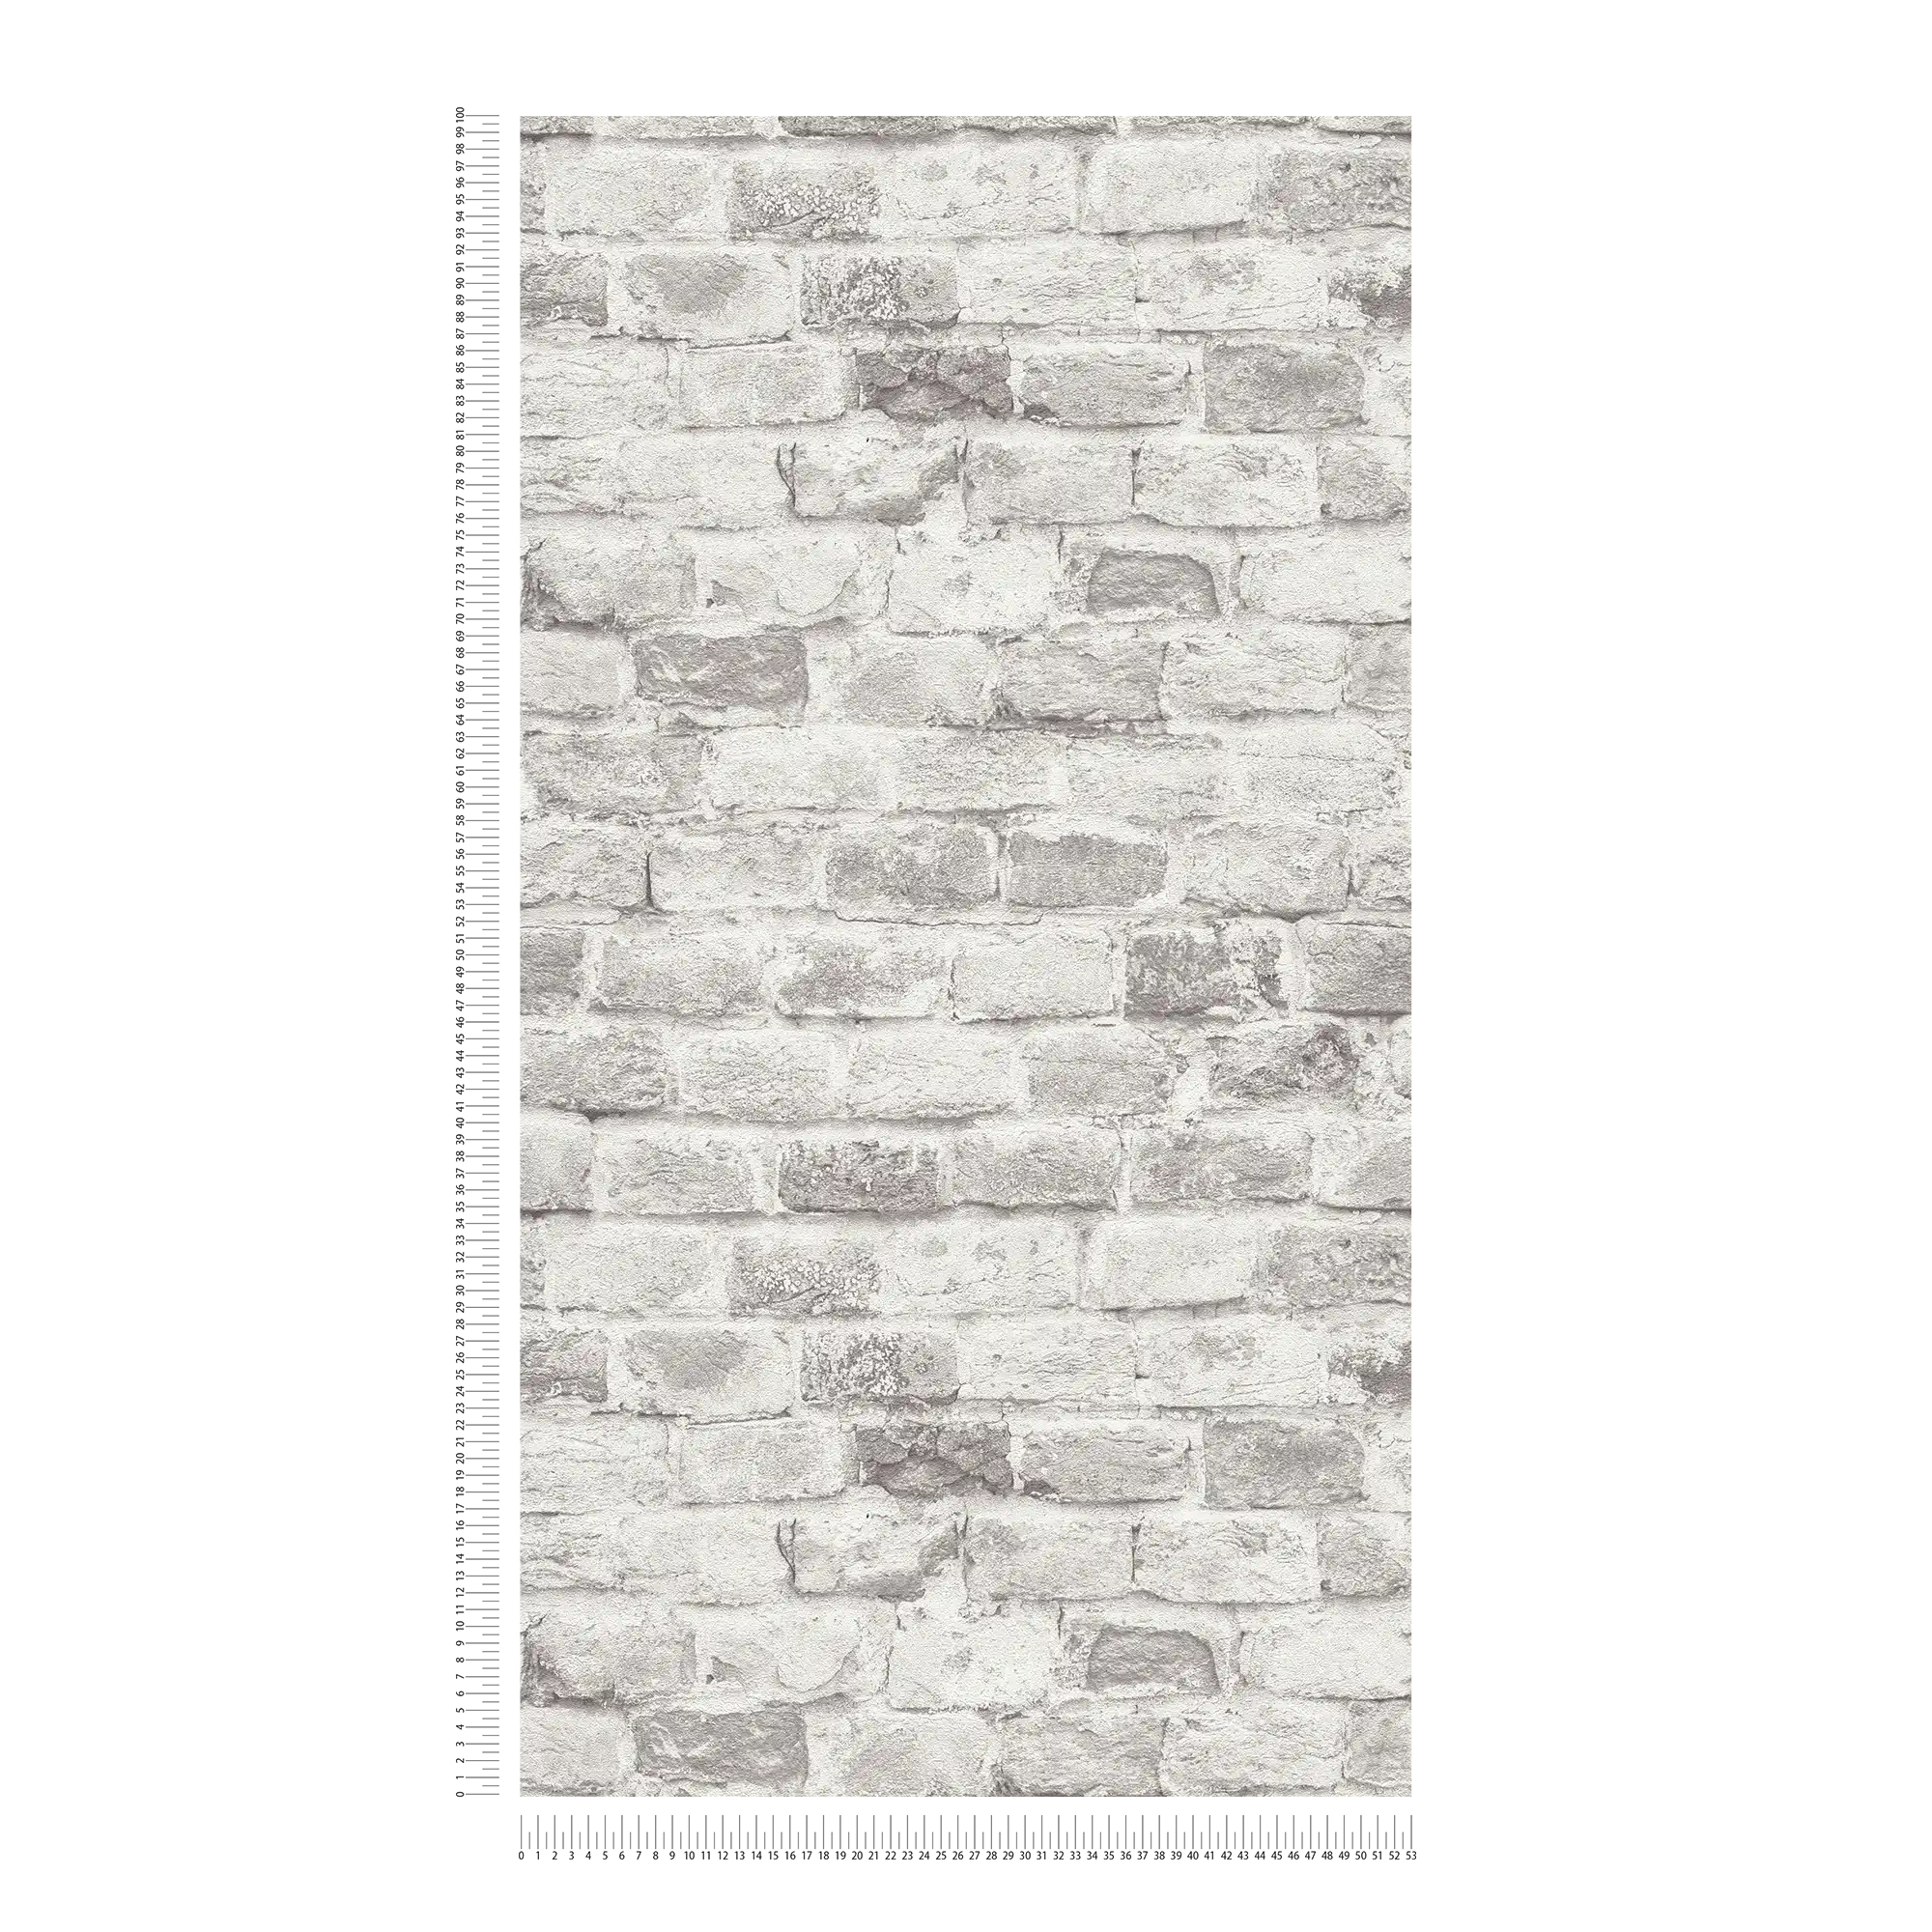             Brick wall non-woven wallpaper in stone look - grey, grey, white
        